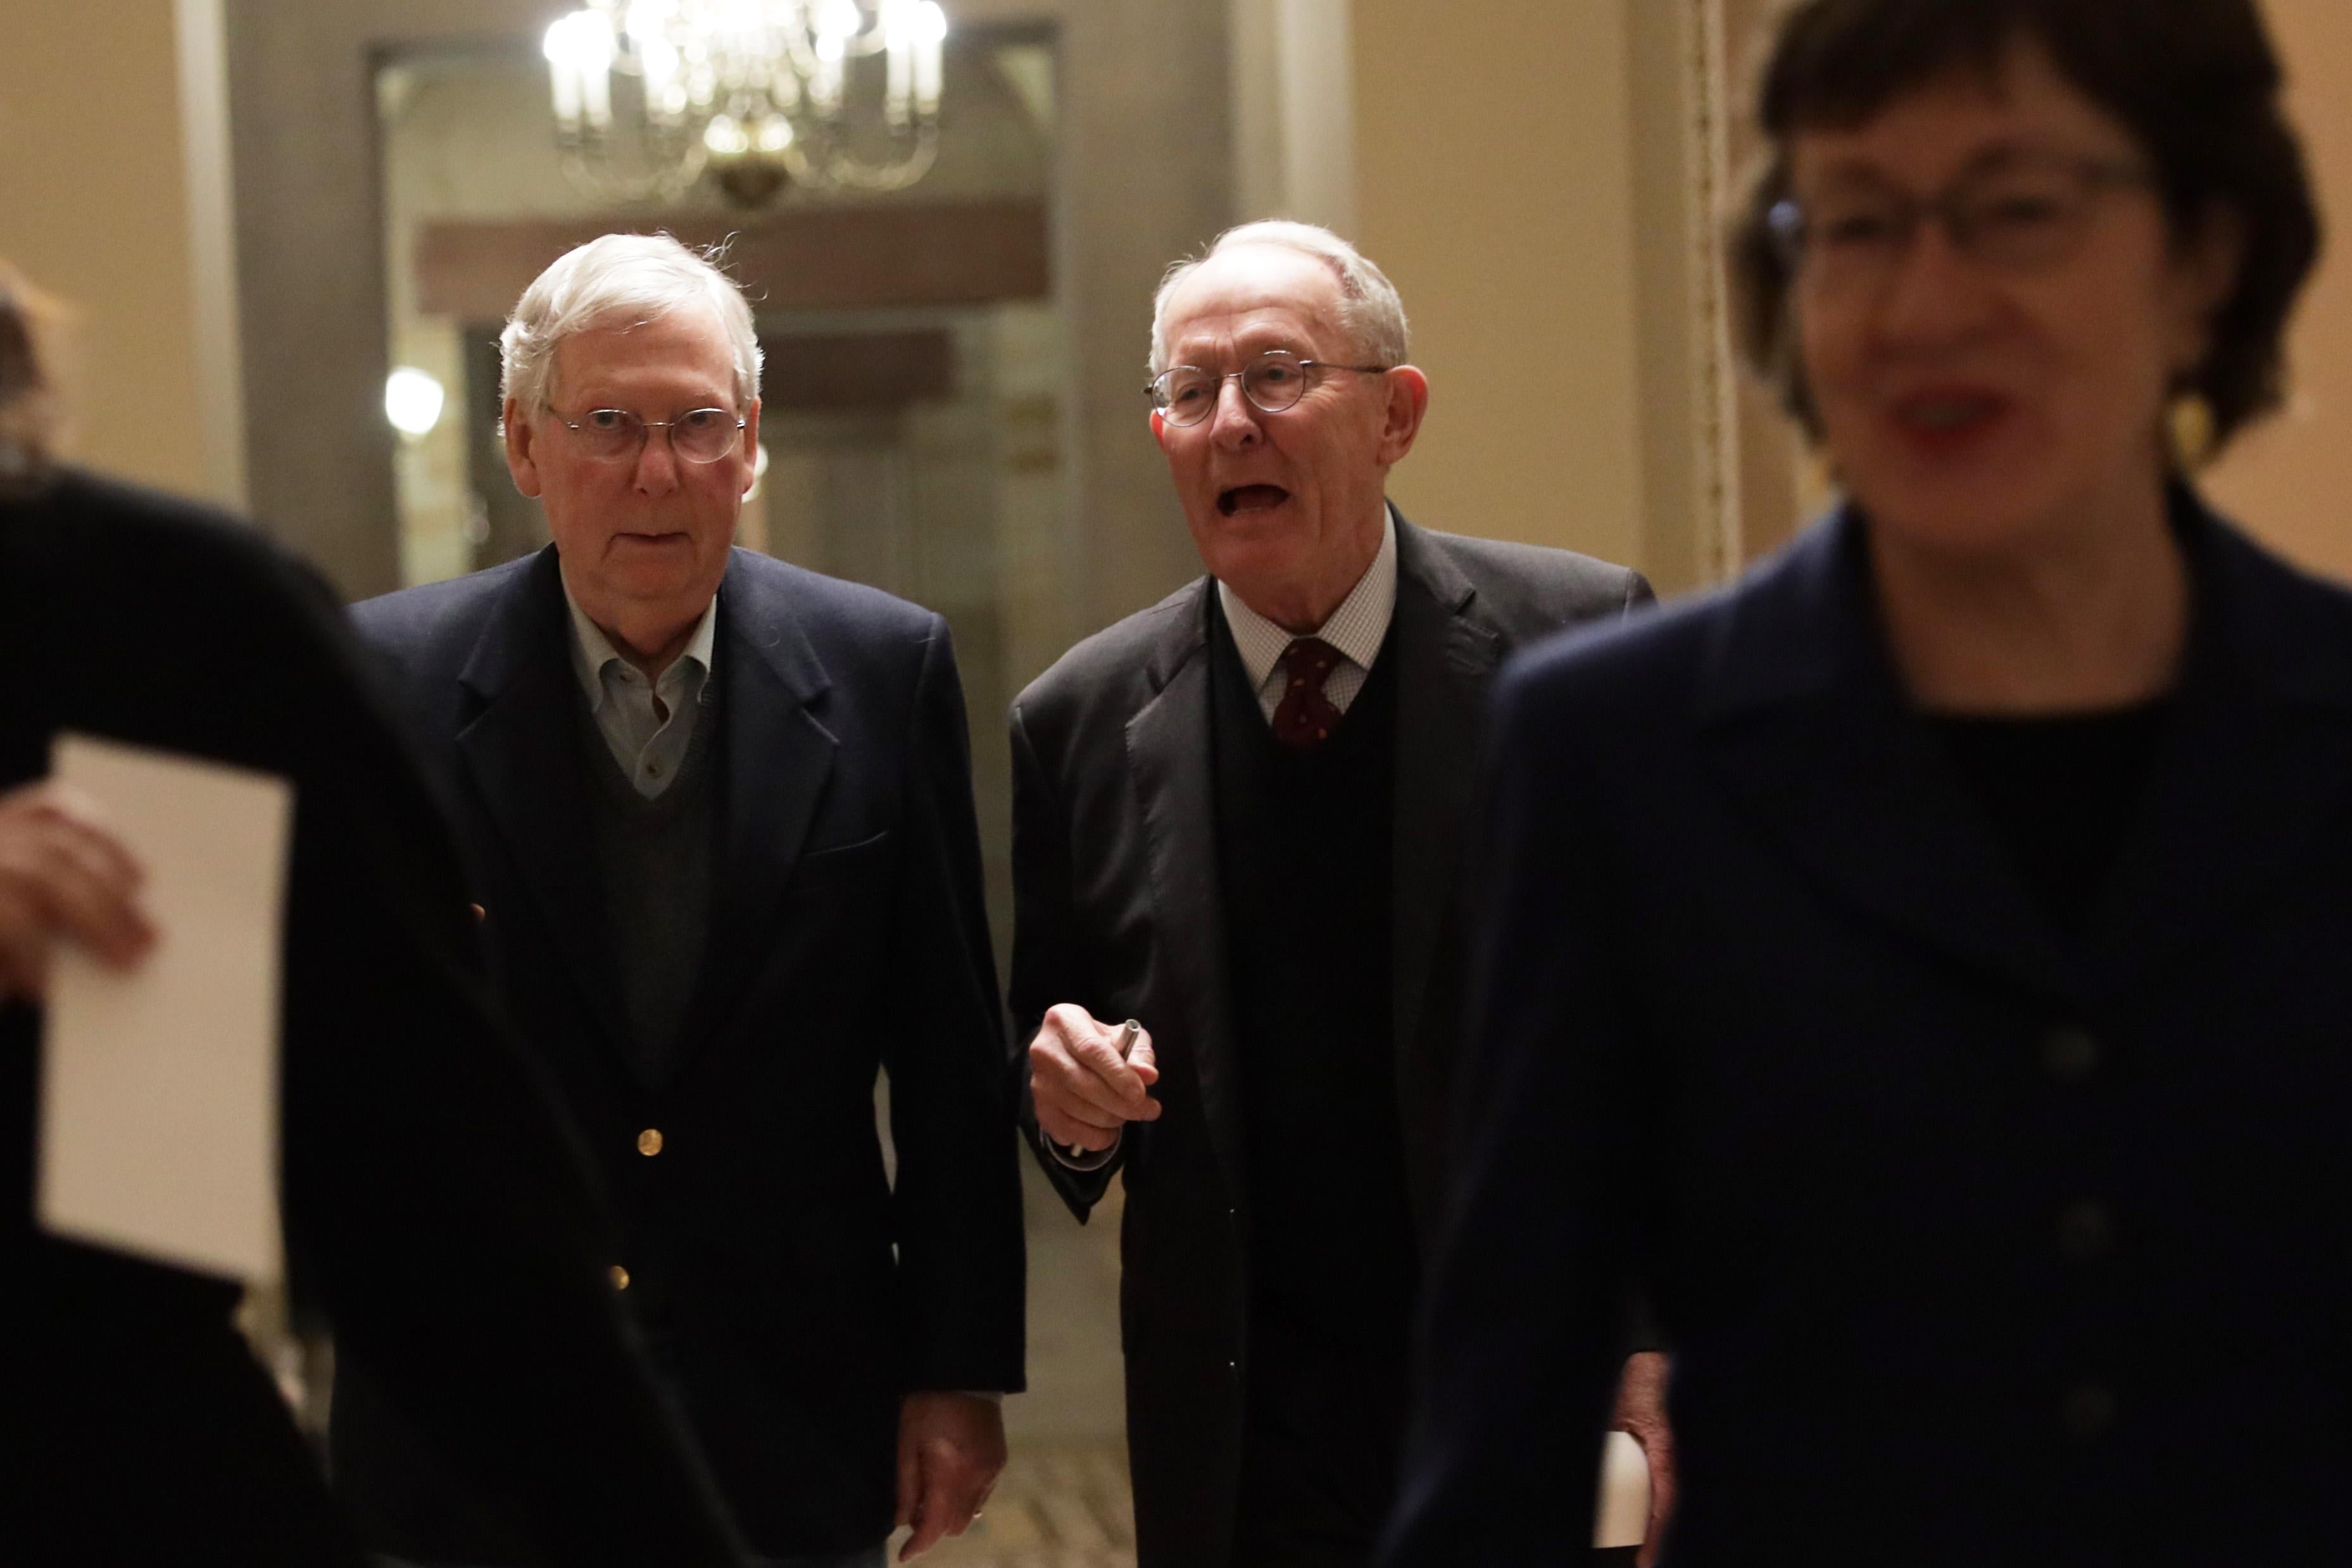 U.S. Senate Majority Leader Sen. Mitch McConnell walks with Sen. Lamar Alexander and Sen. Susan Collins in a hallway after a vote December 2, 2019 at the U.S. Capitol in Washington, DC. 